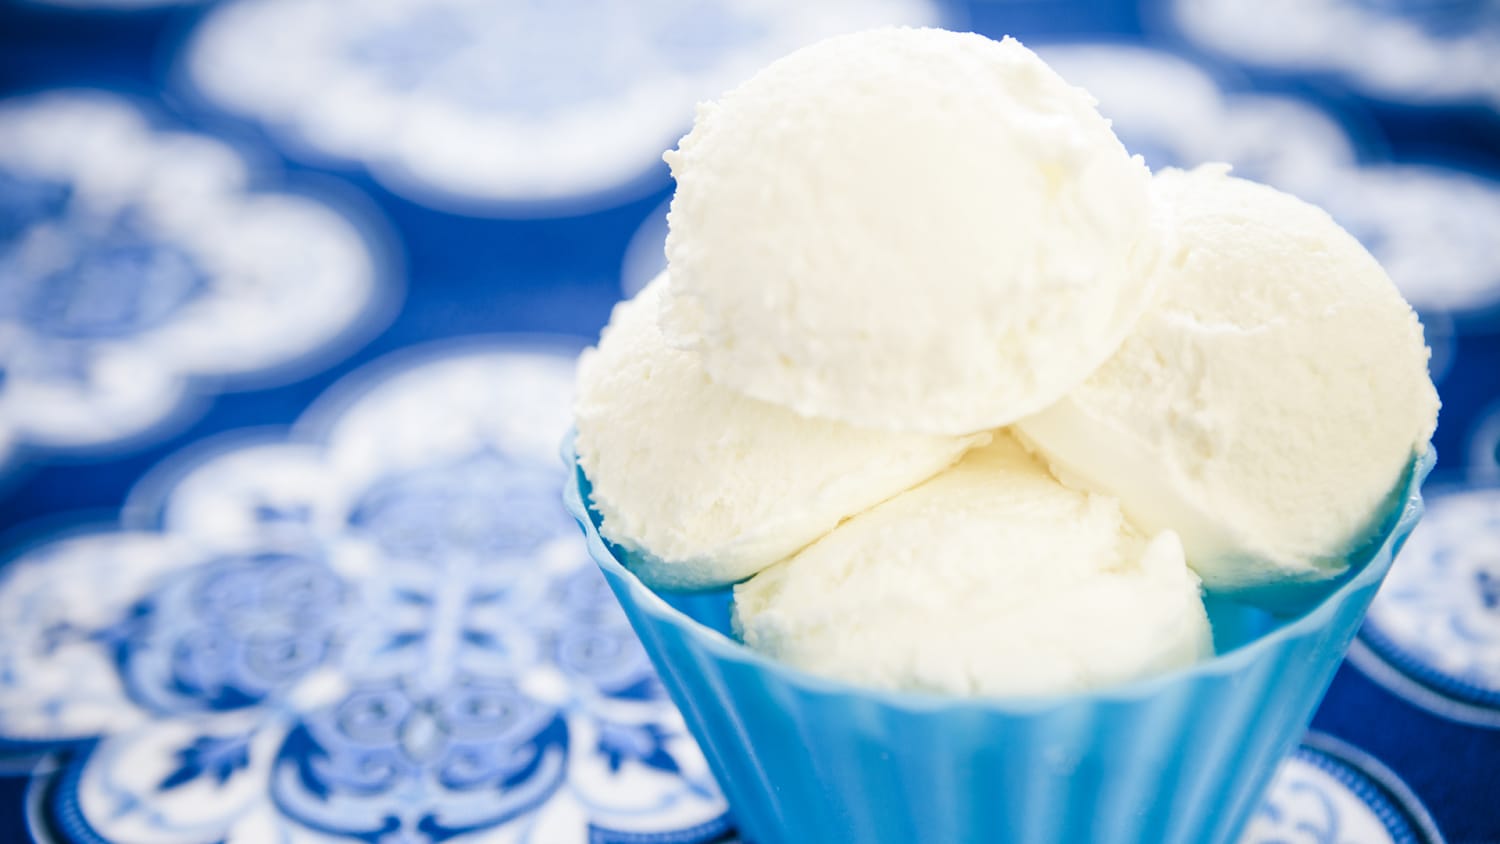 Get the recipe for Jeni's Splendid vanilla ice cream